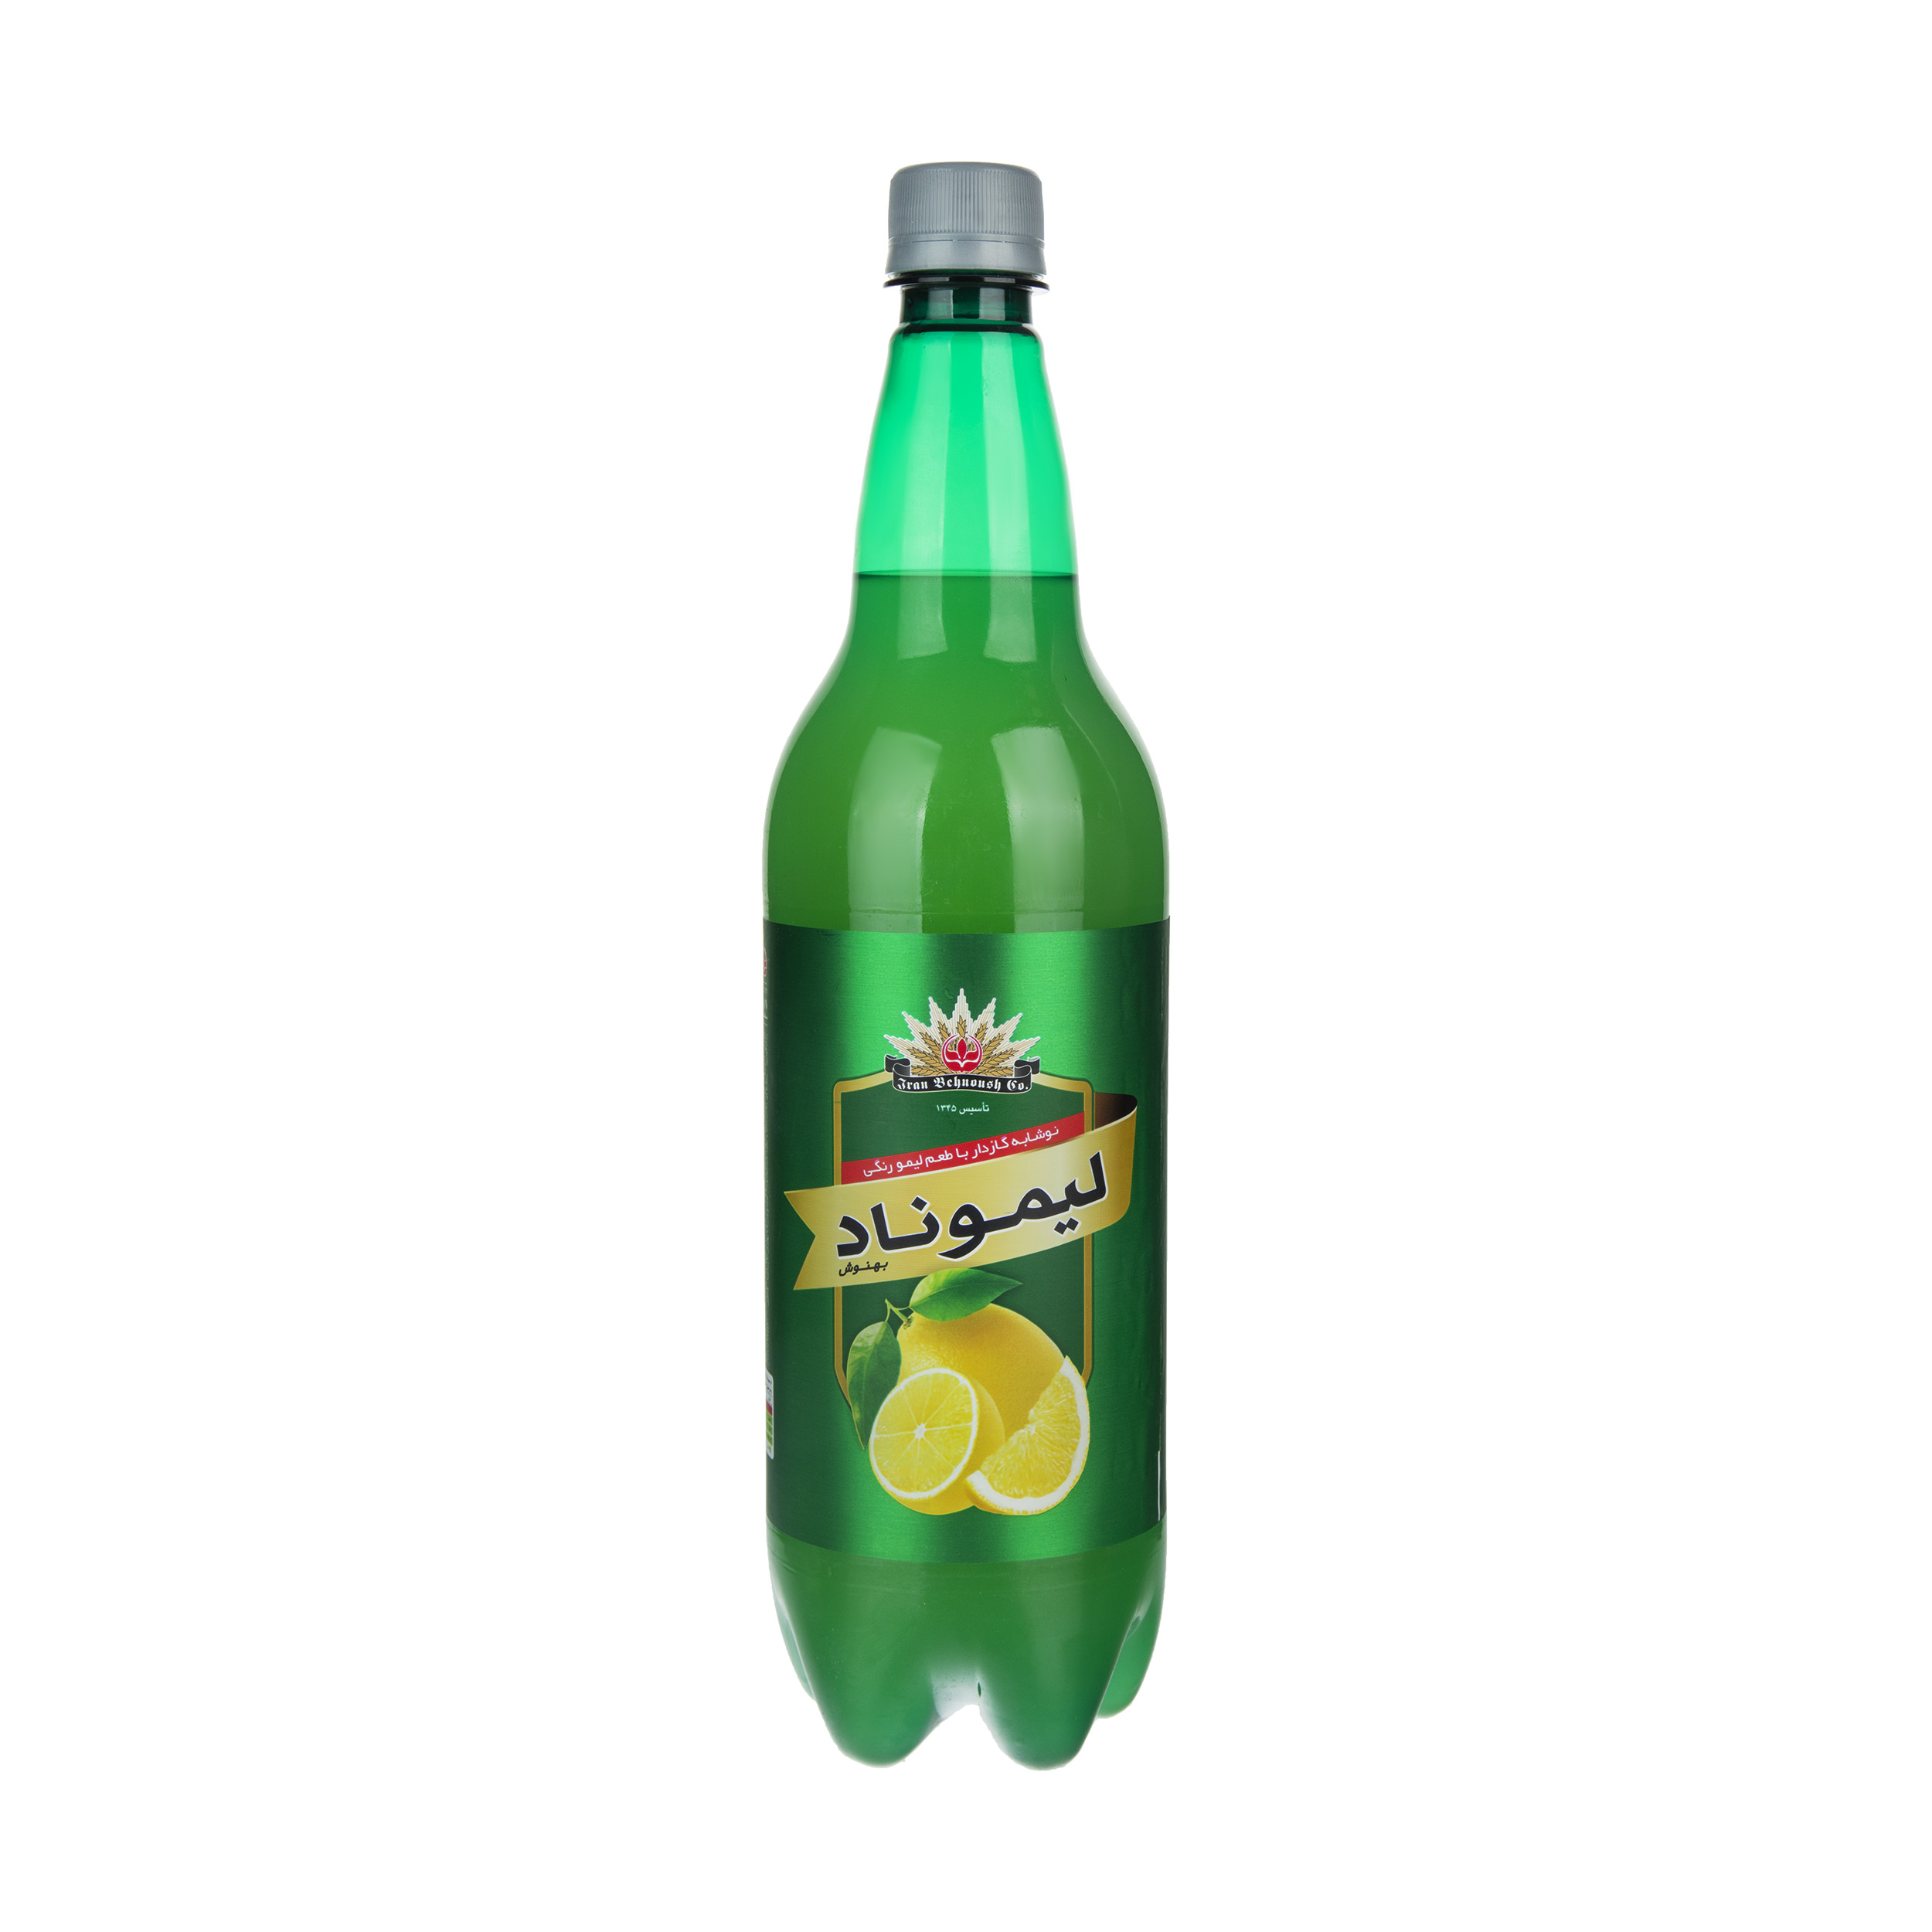 نوشیدنی مالت با طعم لیمو بهنوش - 1 لیتر